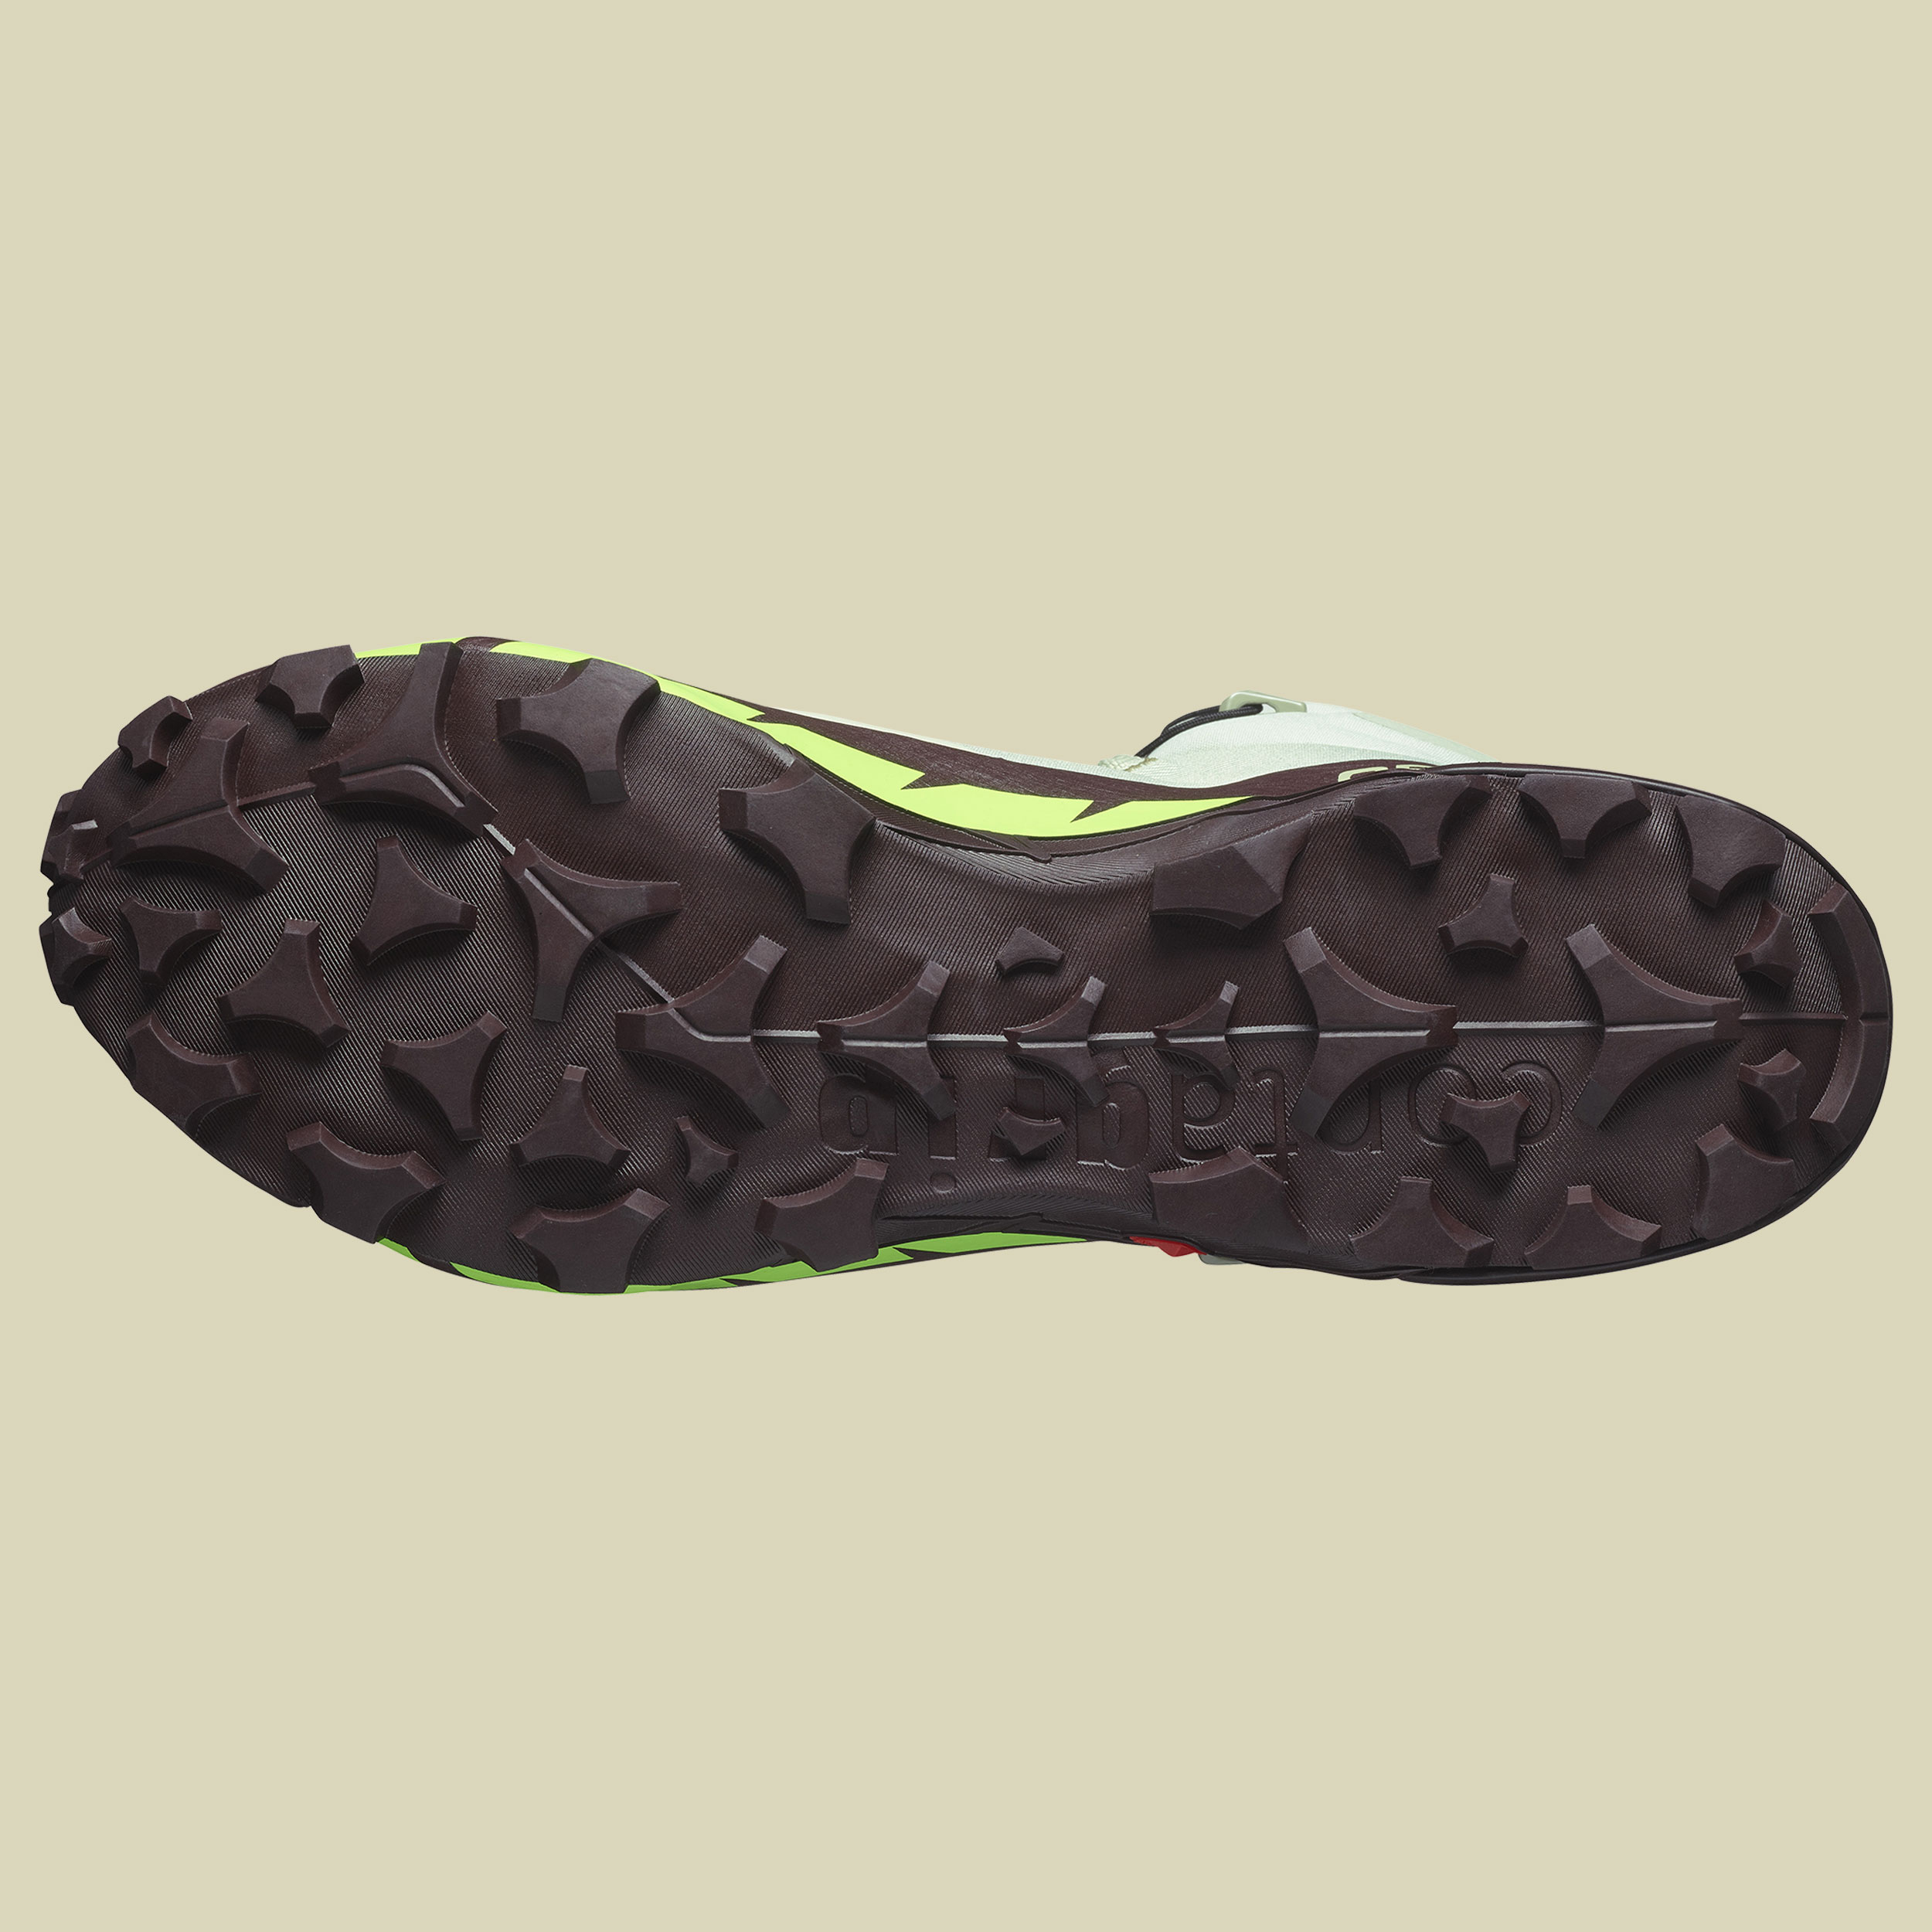 Cross Hike Mid GTX 2 Men Größe UK 9 Farbe desert sage/green gecko/chocolate plum